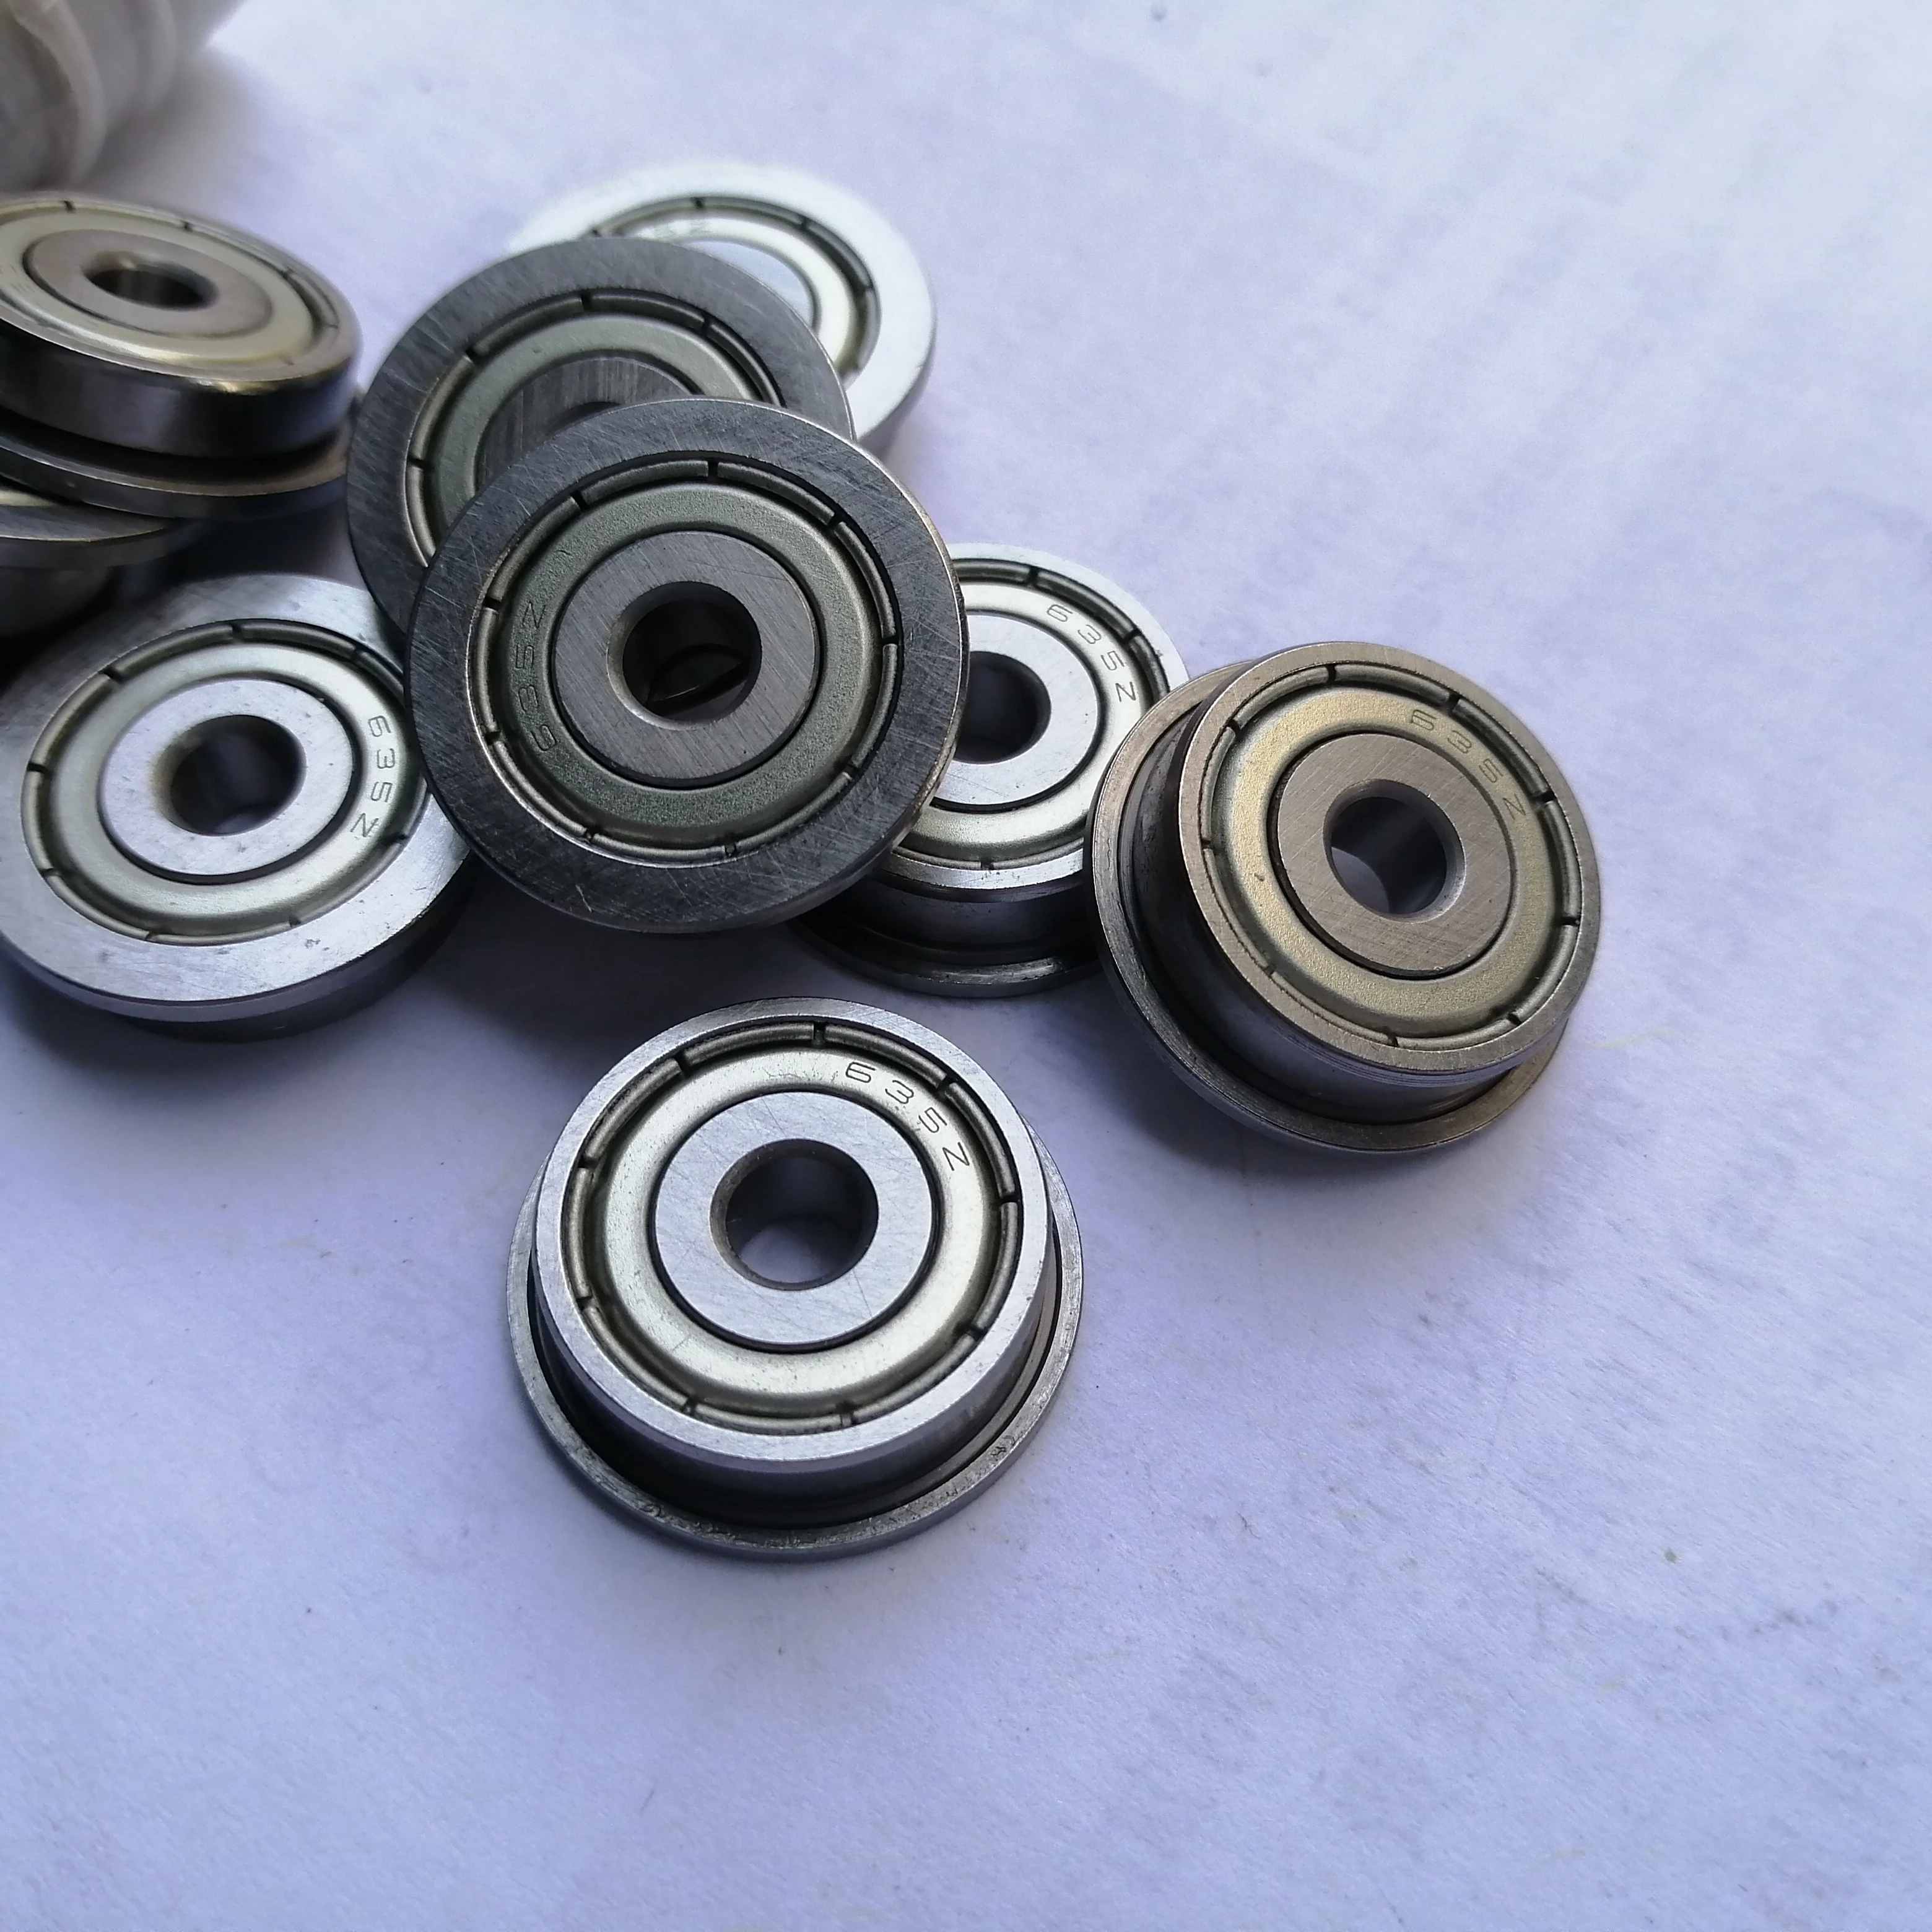 5mm bearing 635ZZ F635ZZ 5mmx19mmx6mm flange ball bearing deep groove bearing toy car bearing 1pcs